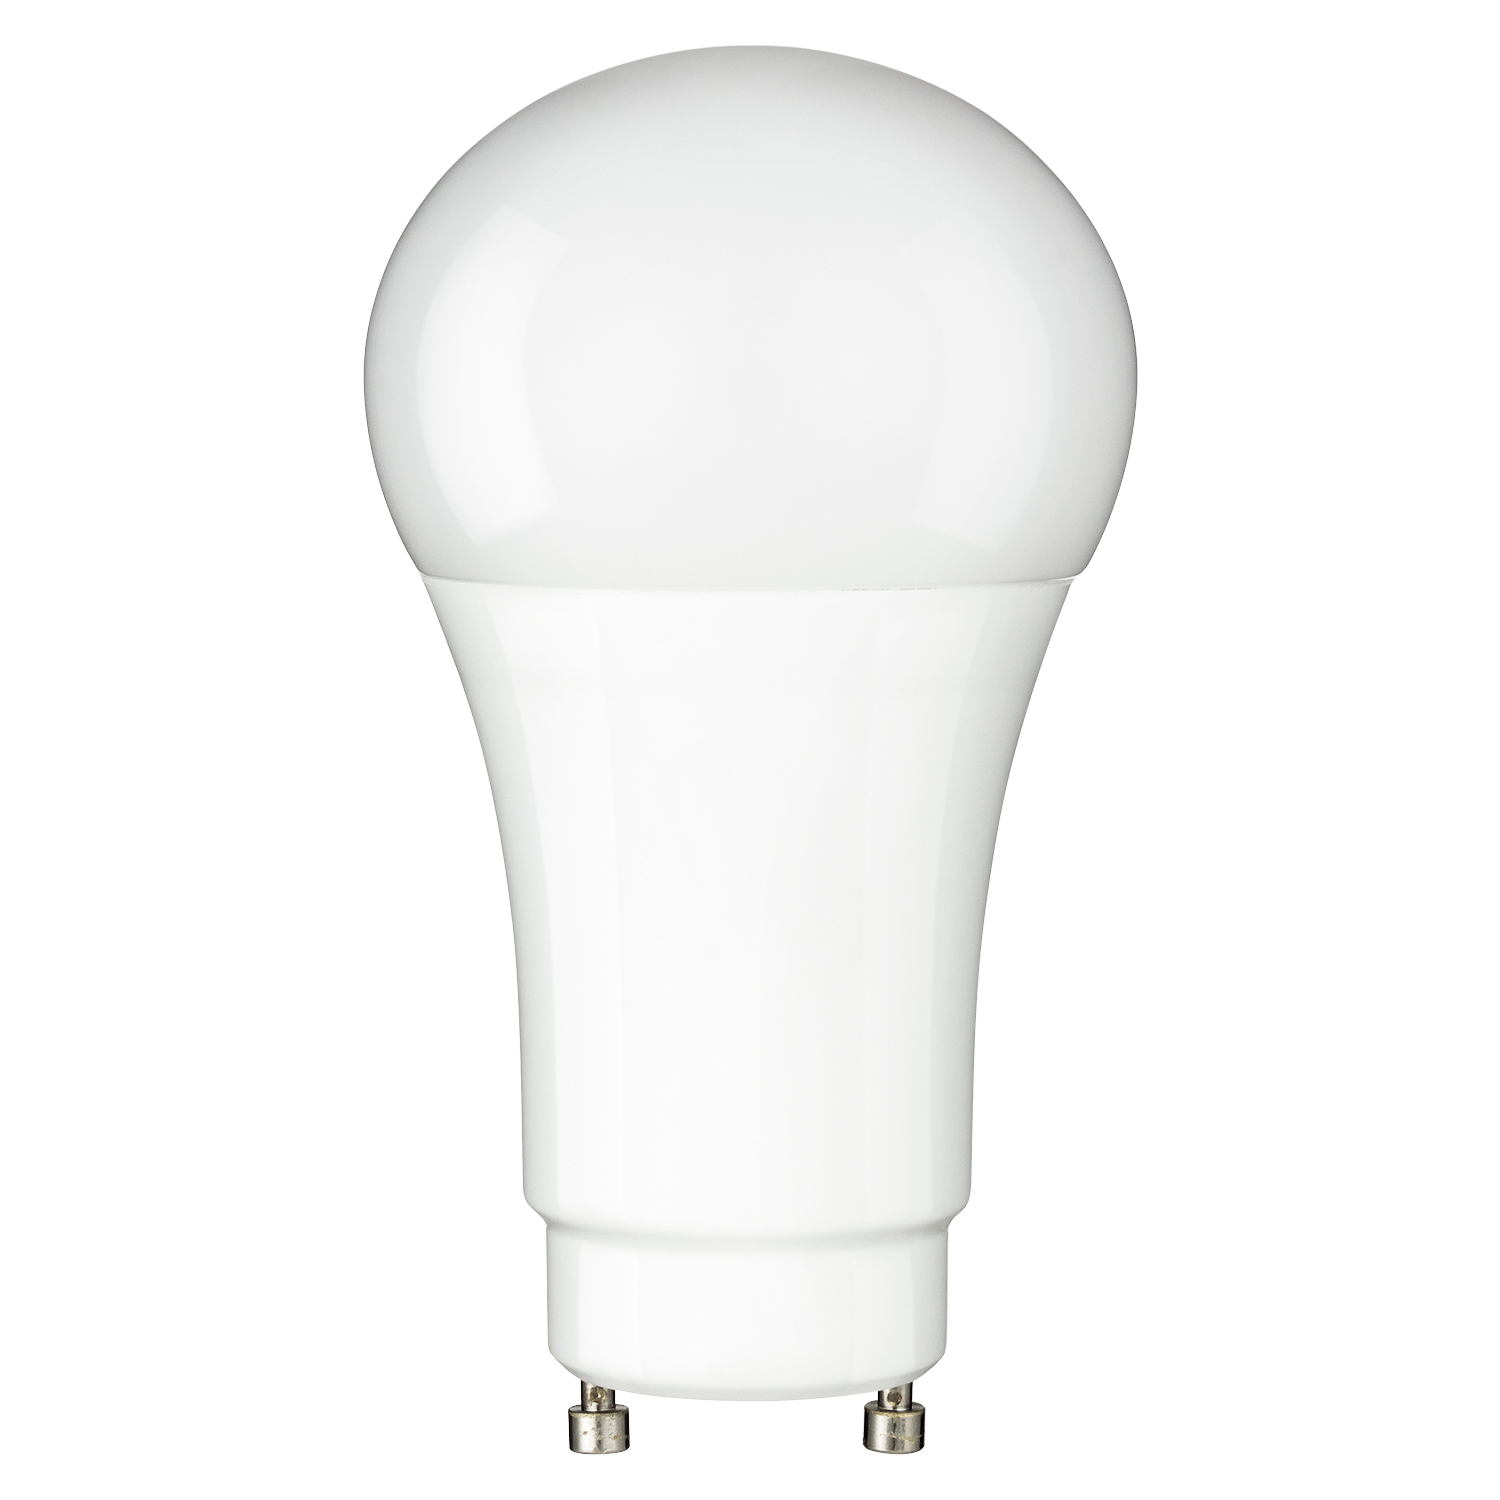 Light Bulb LED GU24 Twist n Lock Base Dimmable UL Listed 5000K